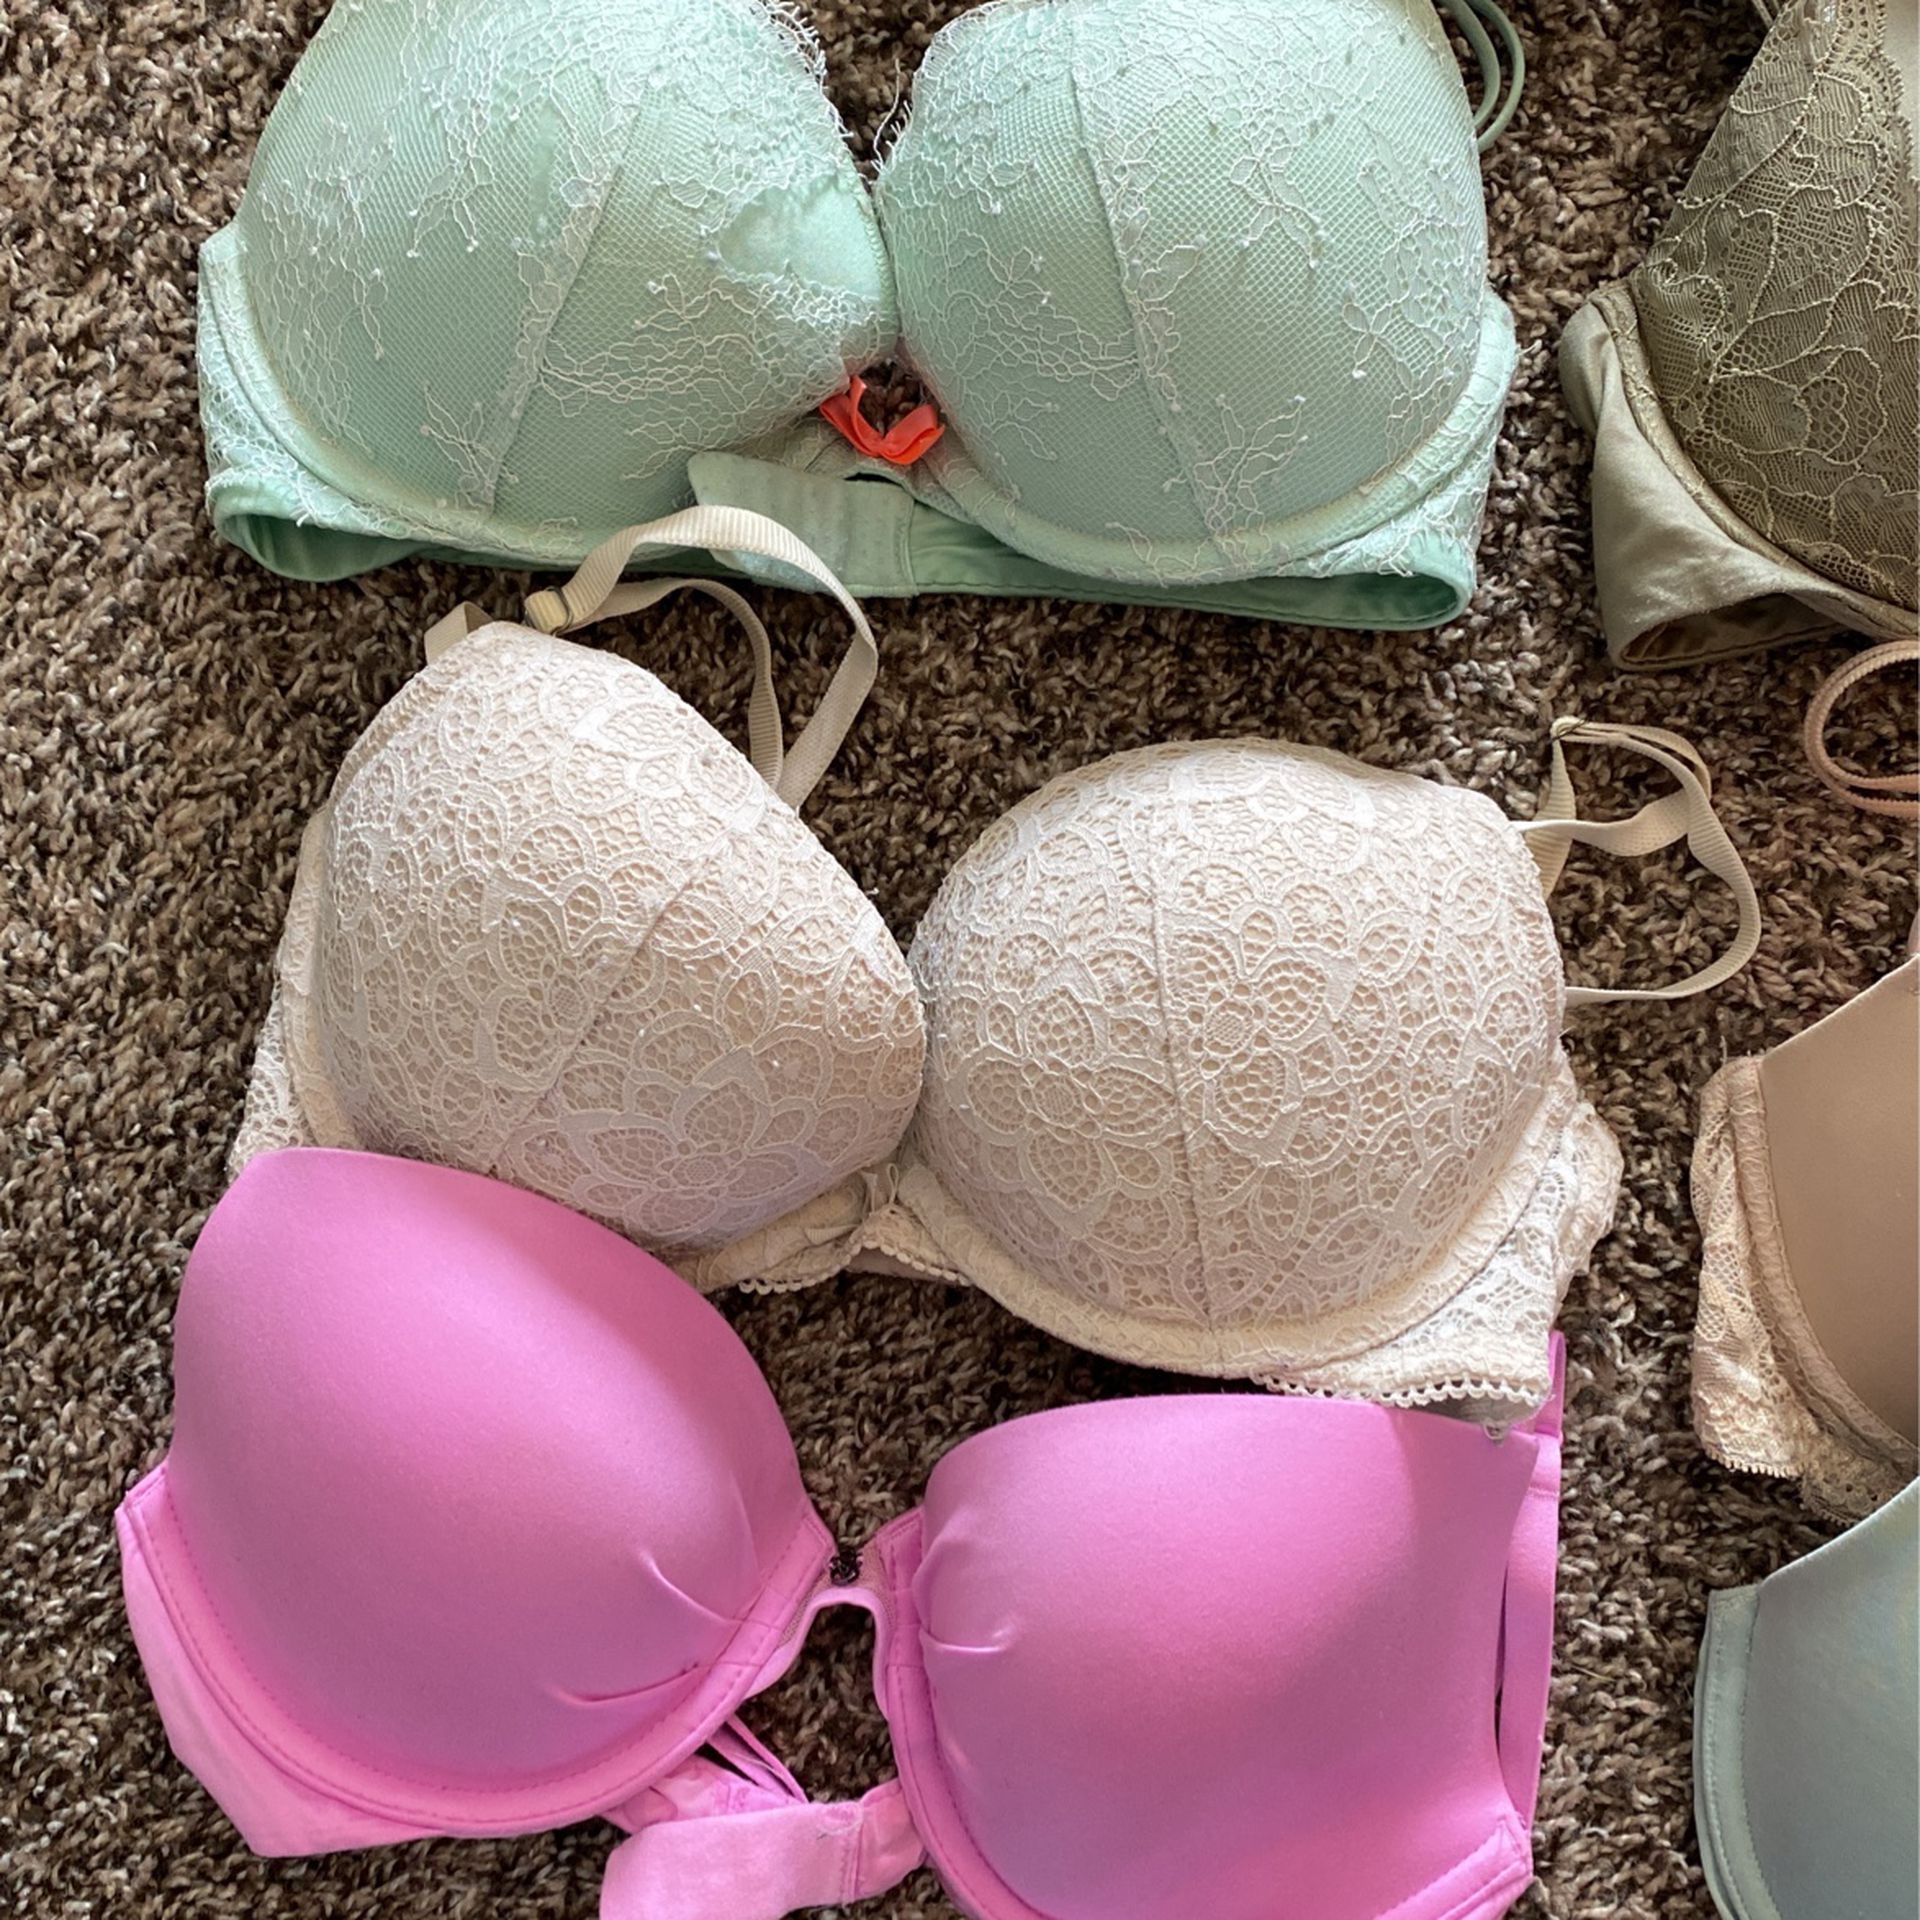 Victoria Secret & PINK bras, Size 32D for Sale in Hillsboro, OR - OfferUp